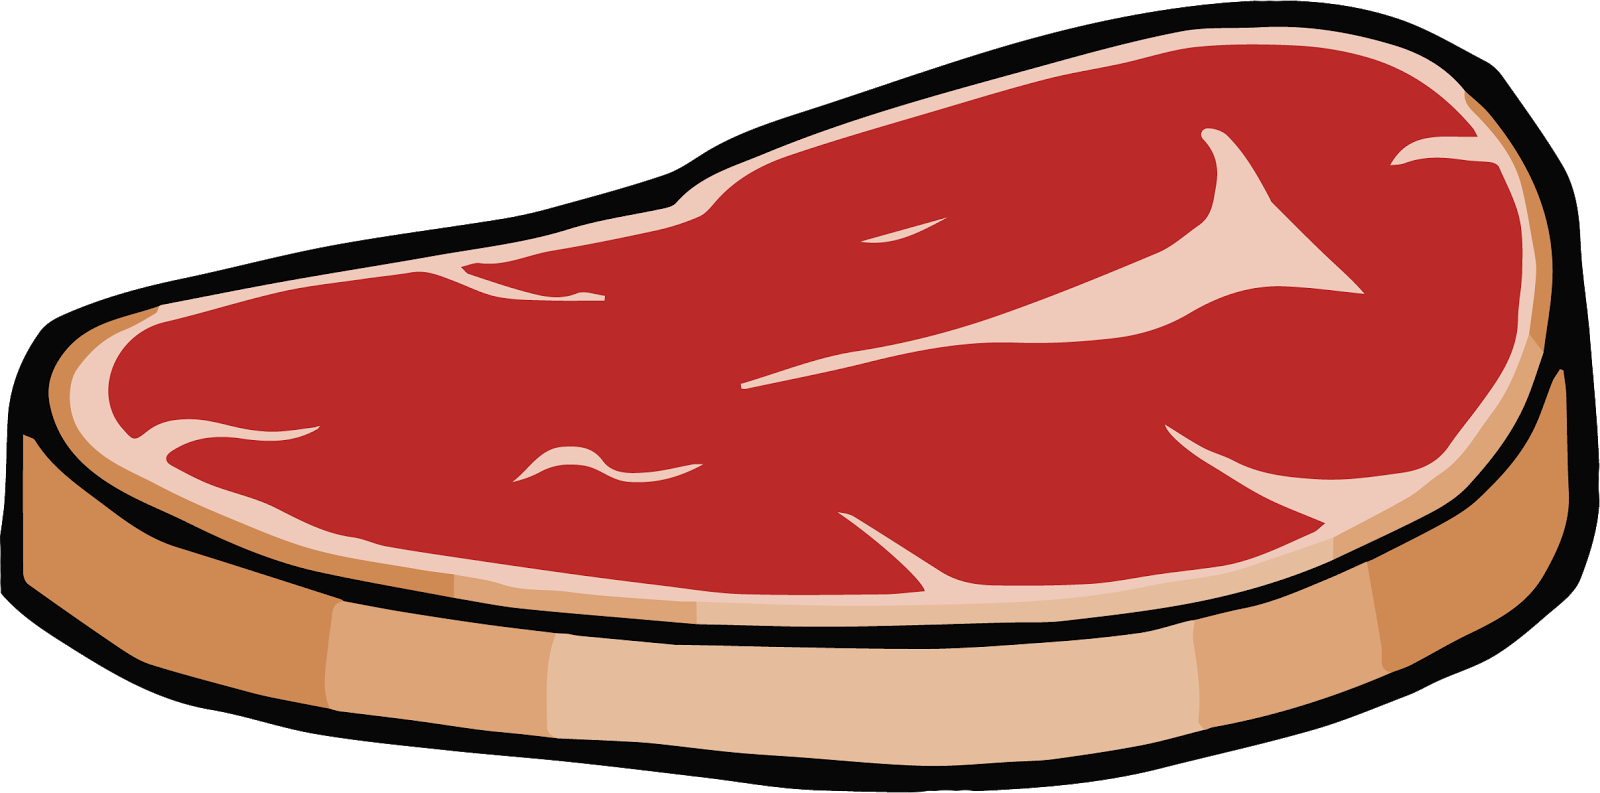 Steak Clipart